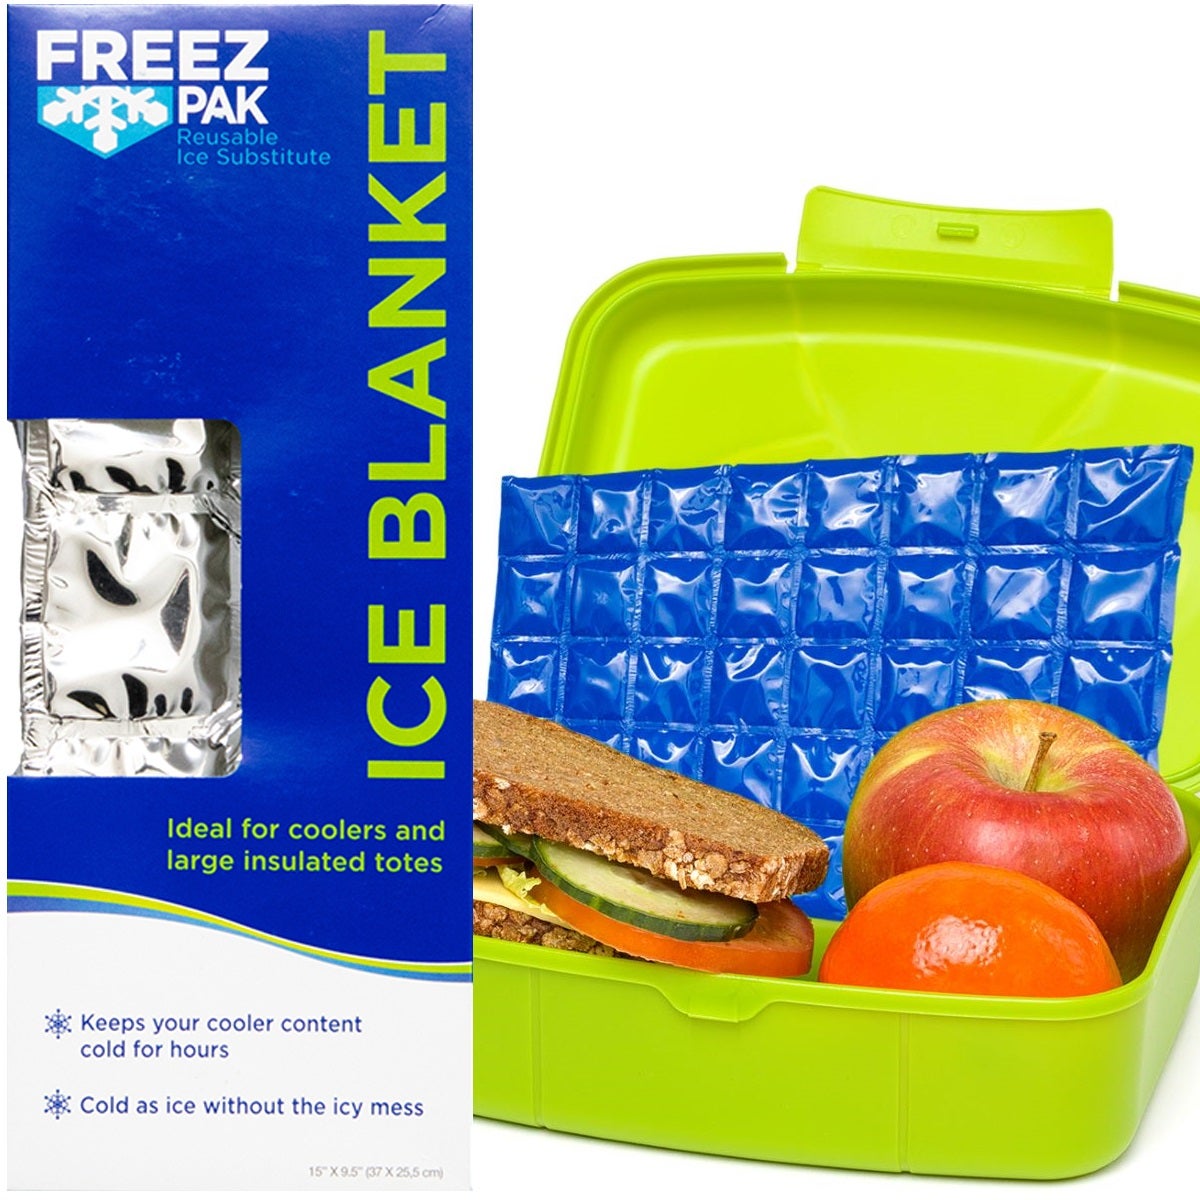 Freez Pak, Reusable Ice Pack, Small